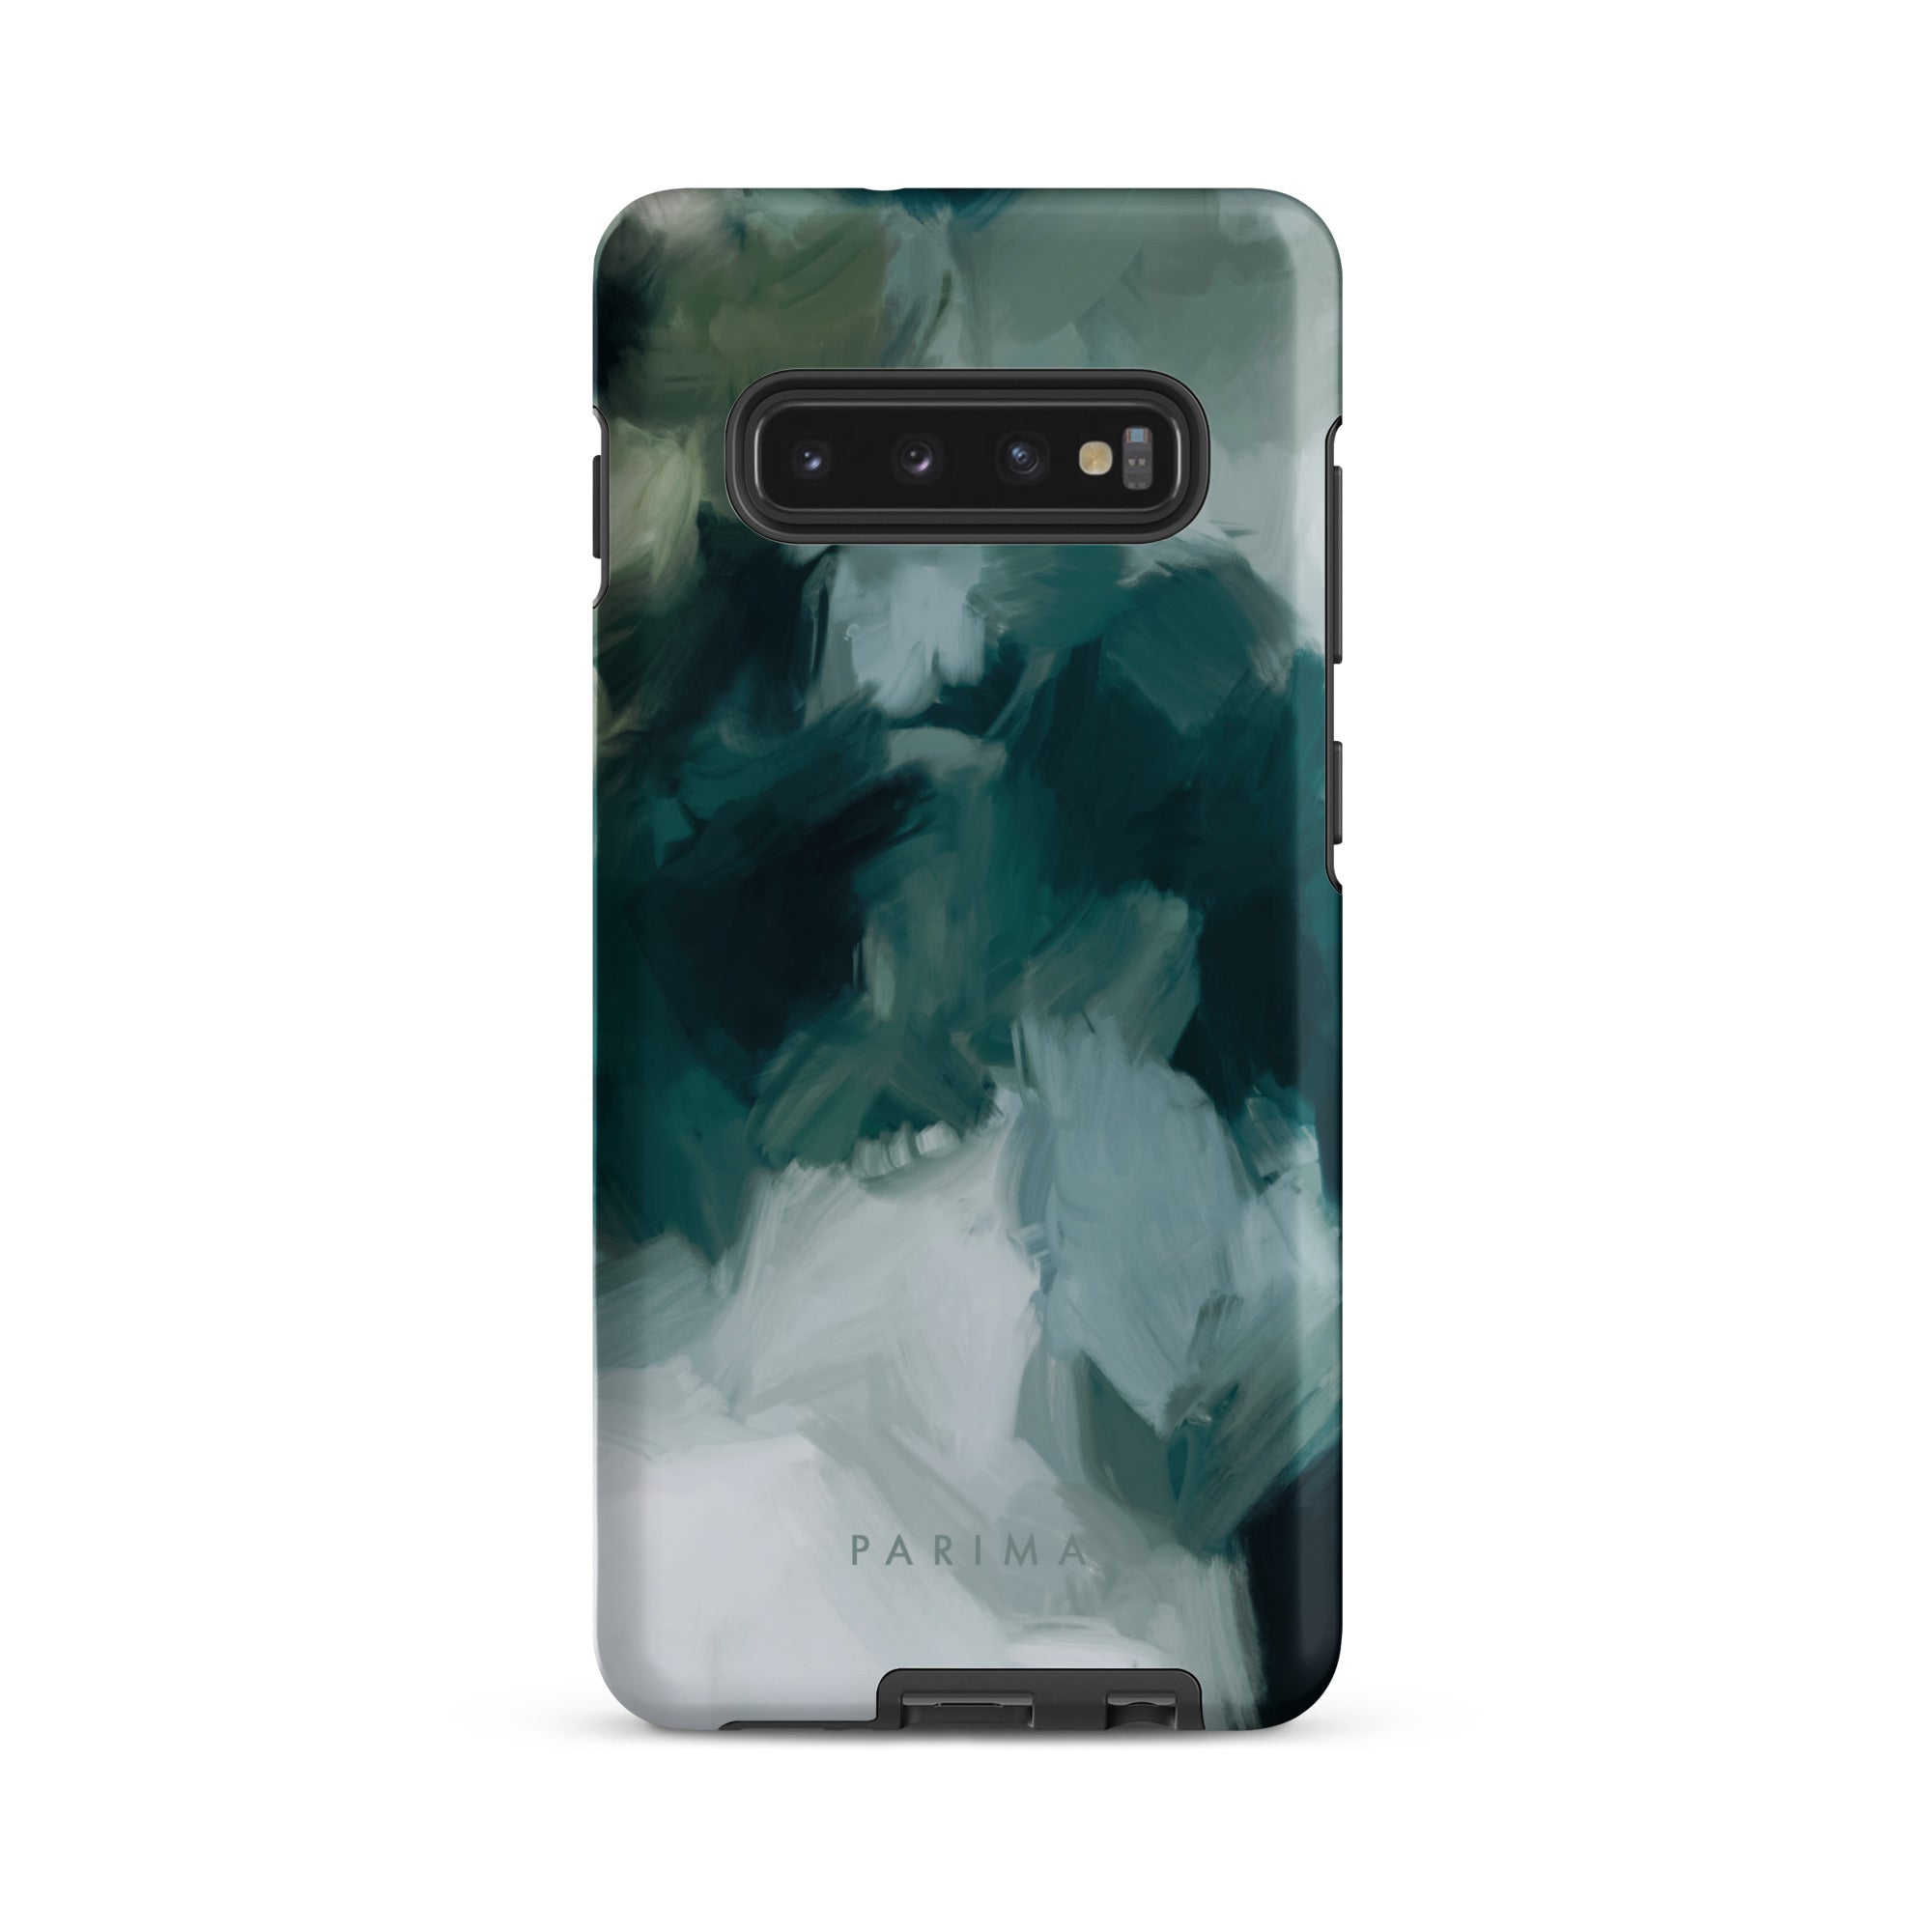 Echo, emerald green abstract art on Samsung Galaxy S10 Plus tough case by Parima Studio